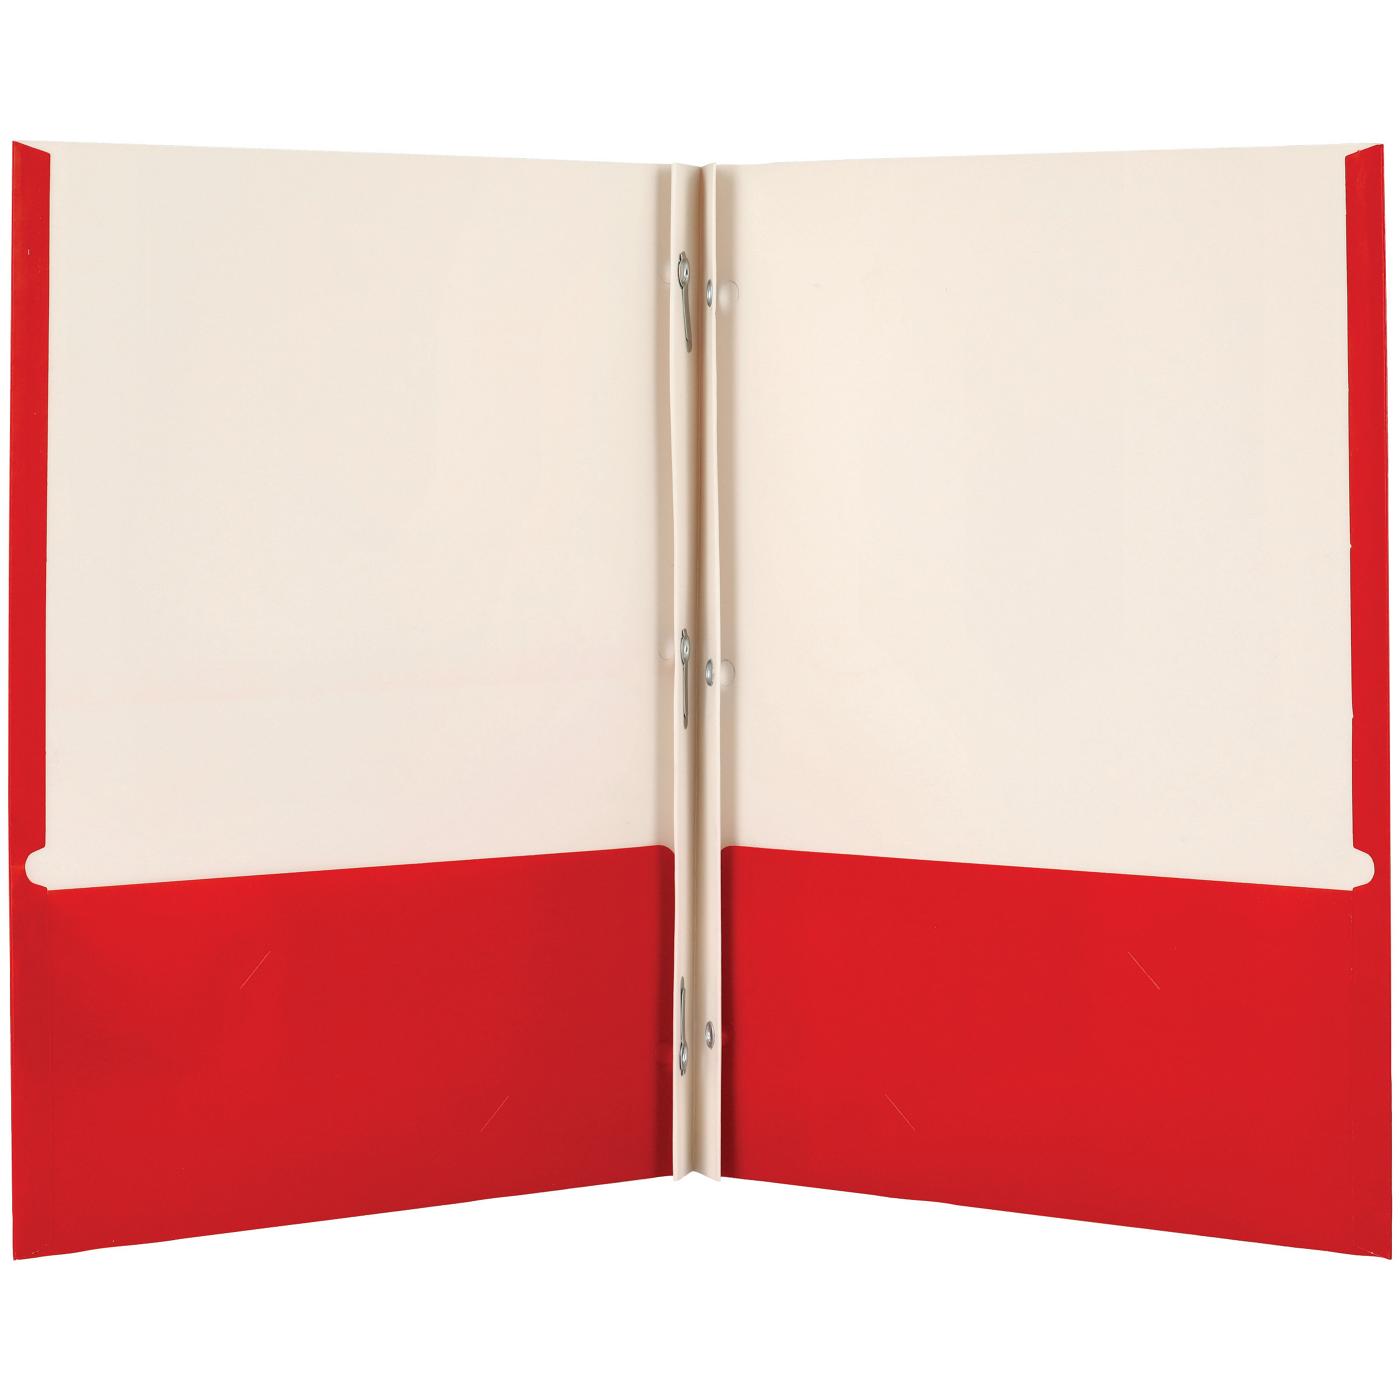 H-E-B Pocket Laminated Folder with Prongs - Red; image 2 of 2